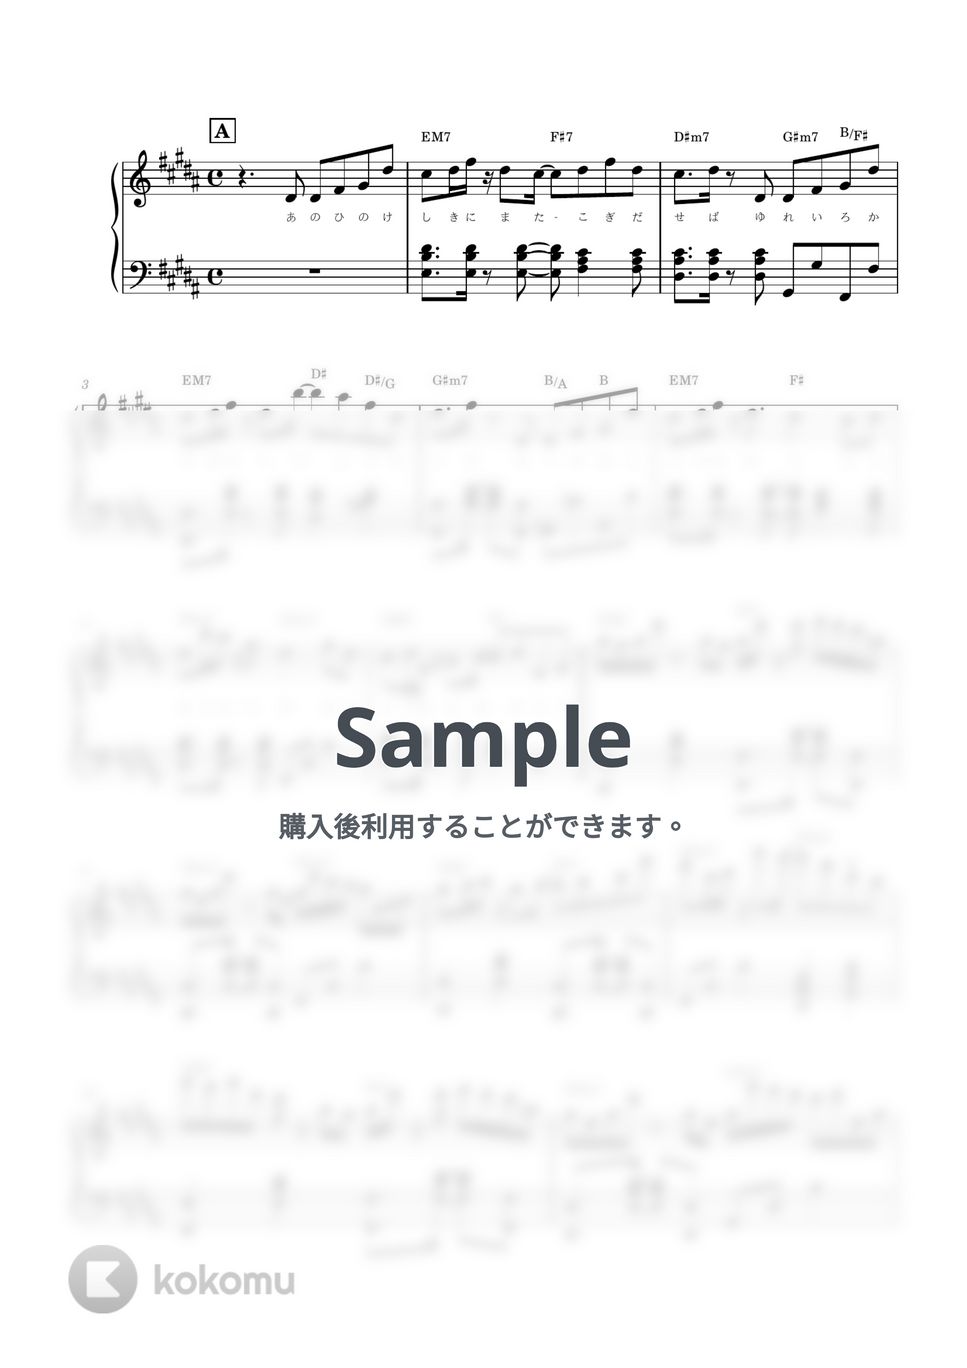 Ayase - フィクションブルー (ピアノソロ / 上級 / 歌詞・コードあり / 初音ミク) by ena